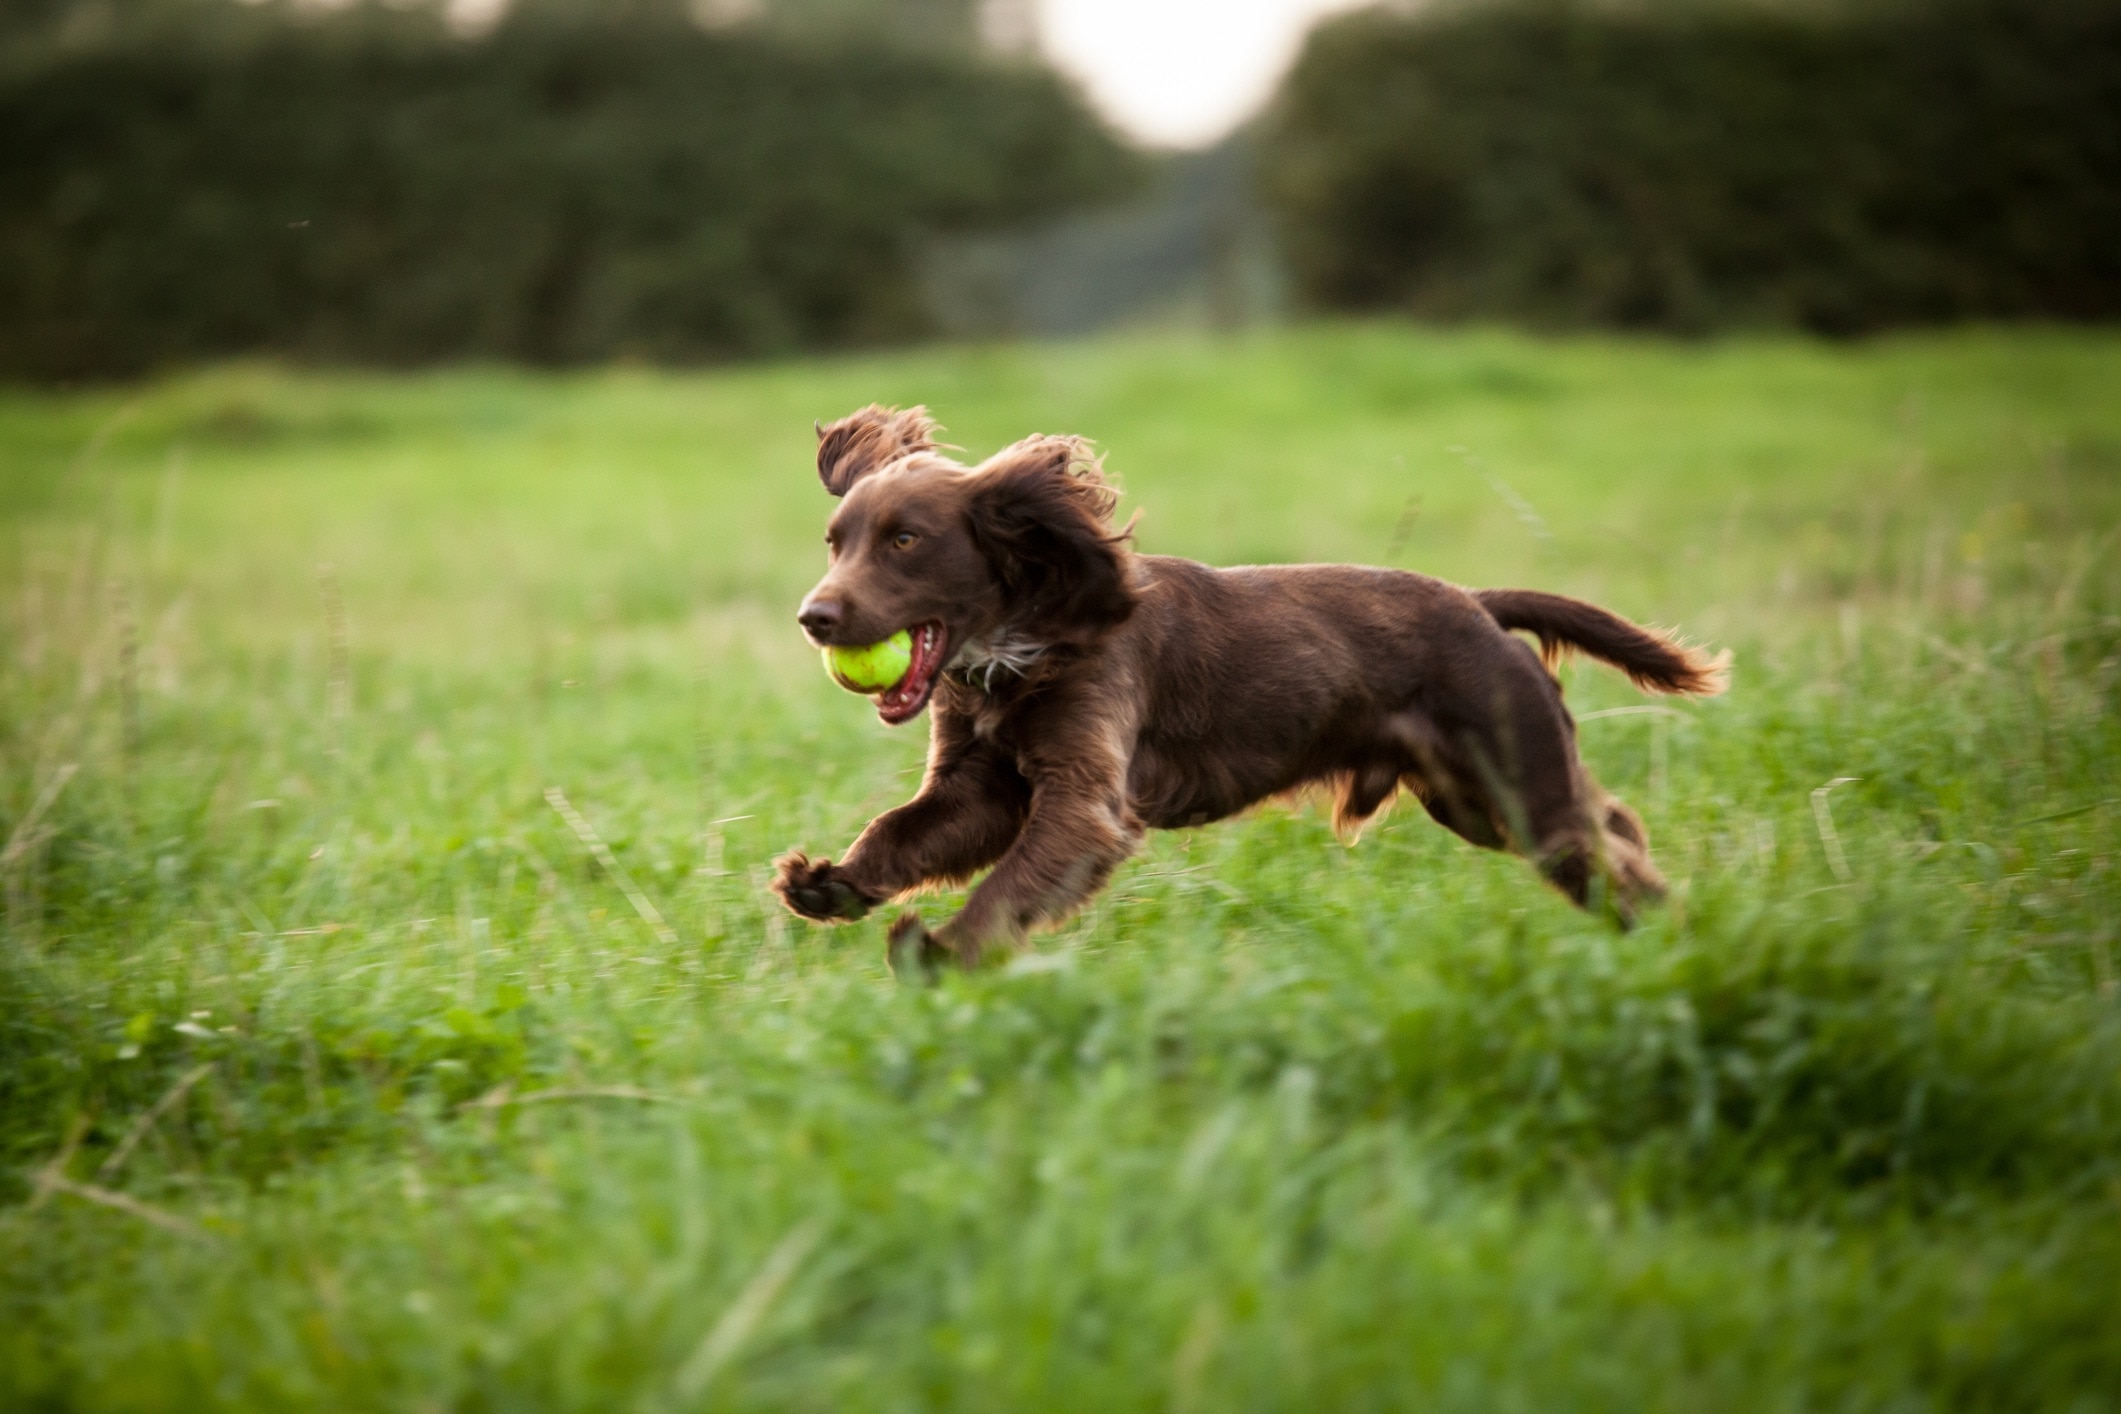 brown boykin spaniel running through grass with a tennis ball in his mouth